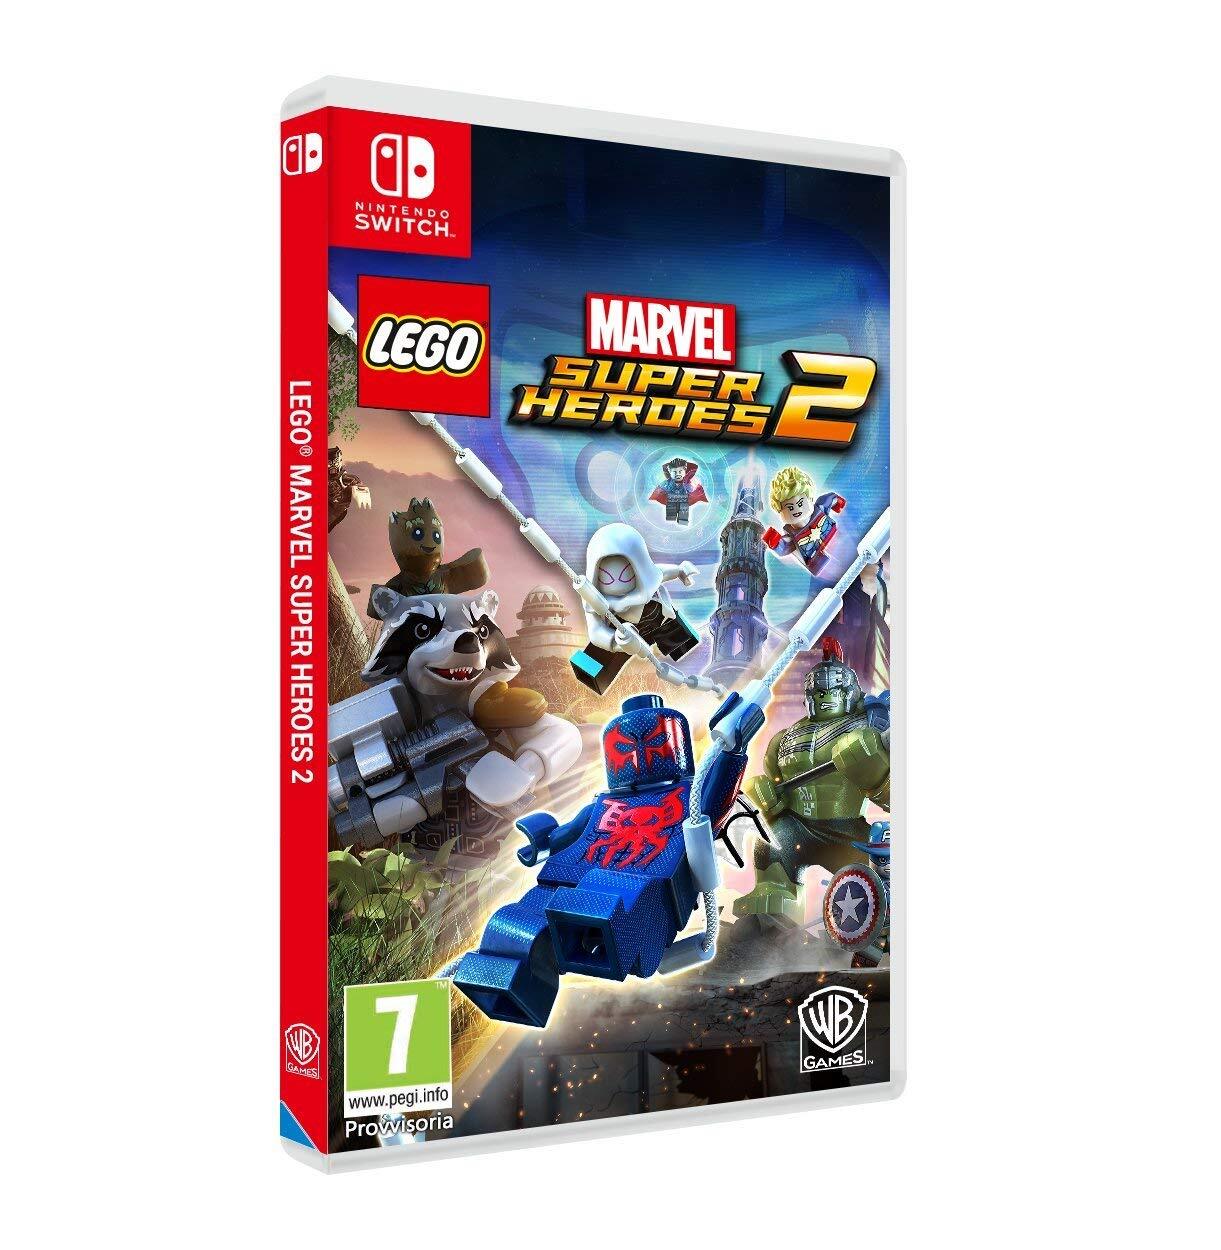 Galiano Videogioco Warner Lego Marvel Super Heroes 2 Nintendo Switch